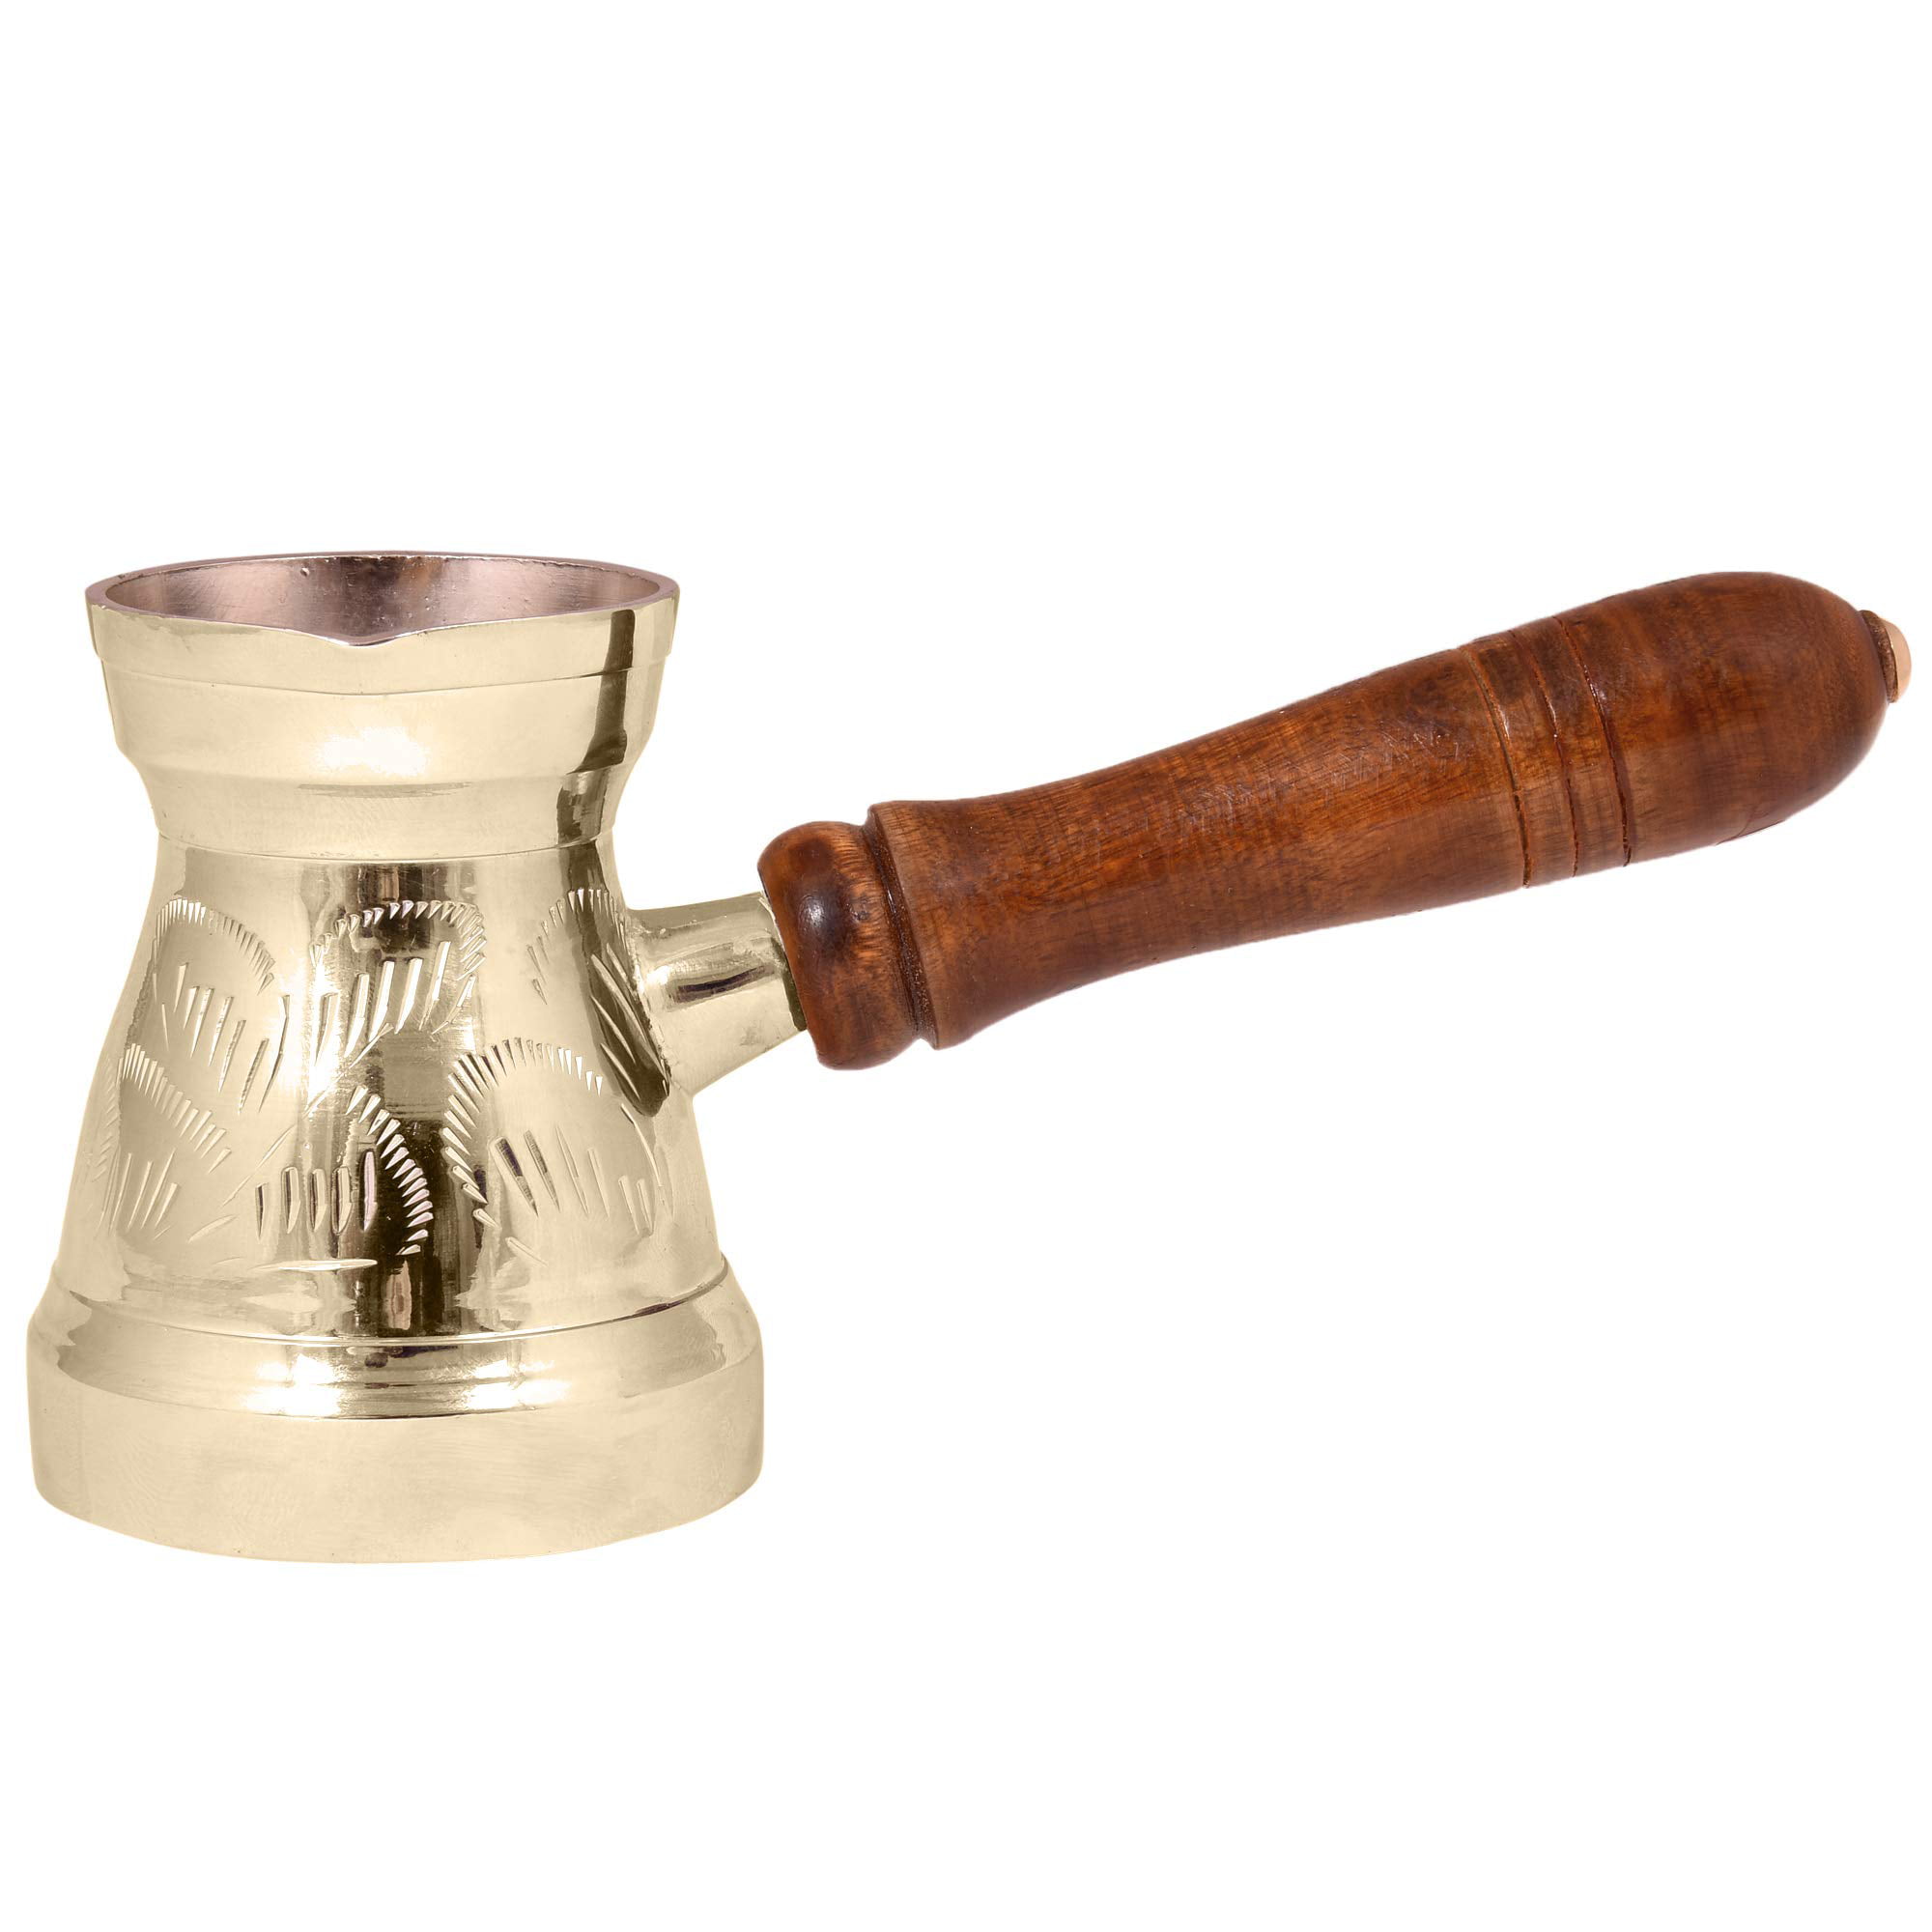 diollo Brass Engraved Arabic Cezve Ibrik Briki Greek Turkish Coffee Pot Serve Ware with Wooden Handle 8 OZ 